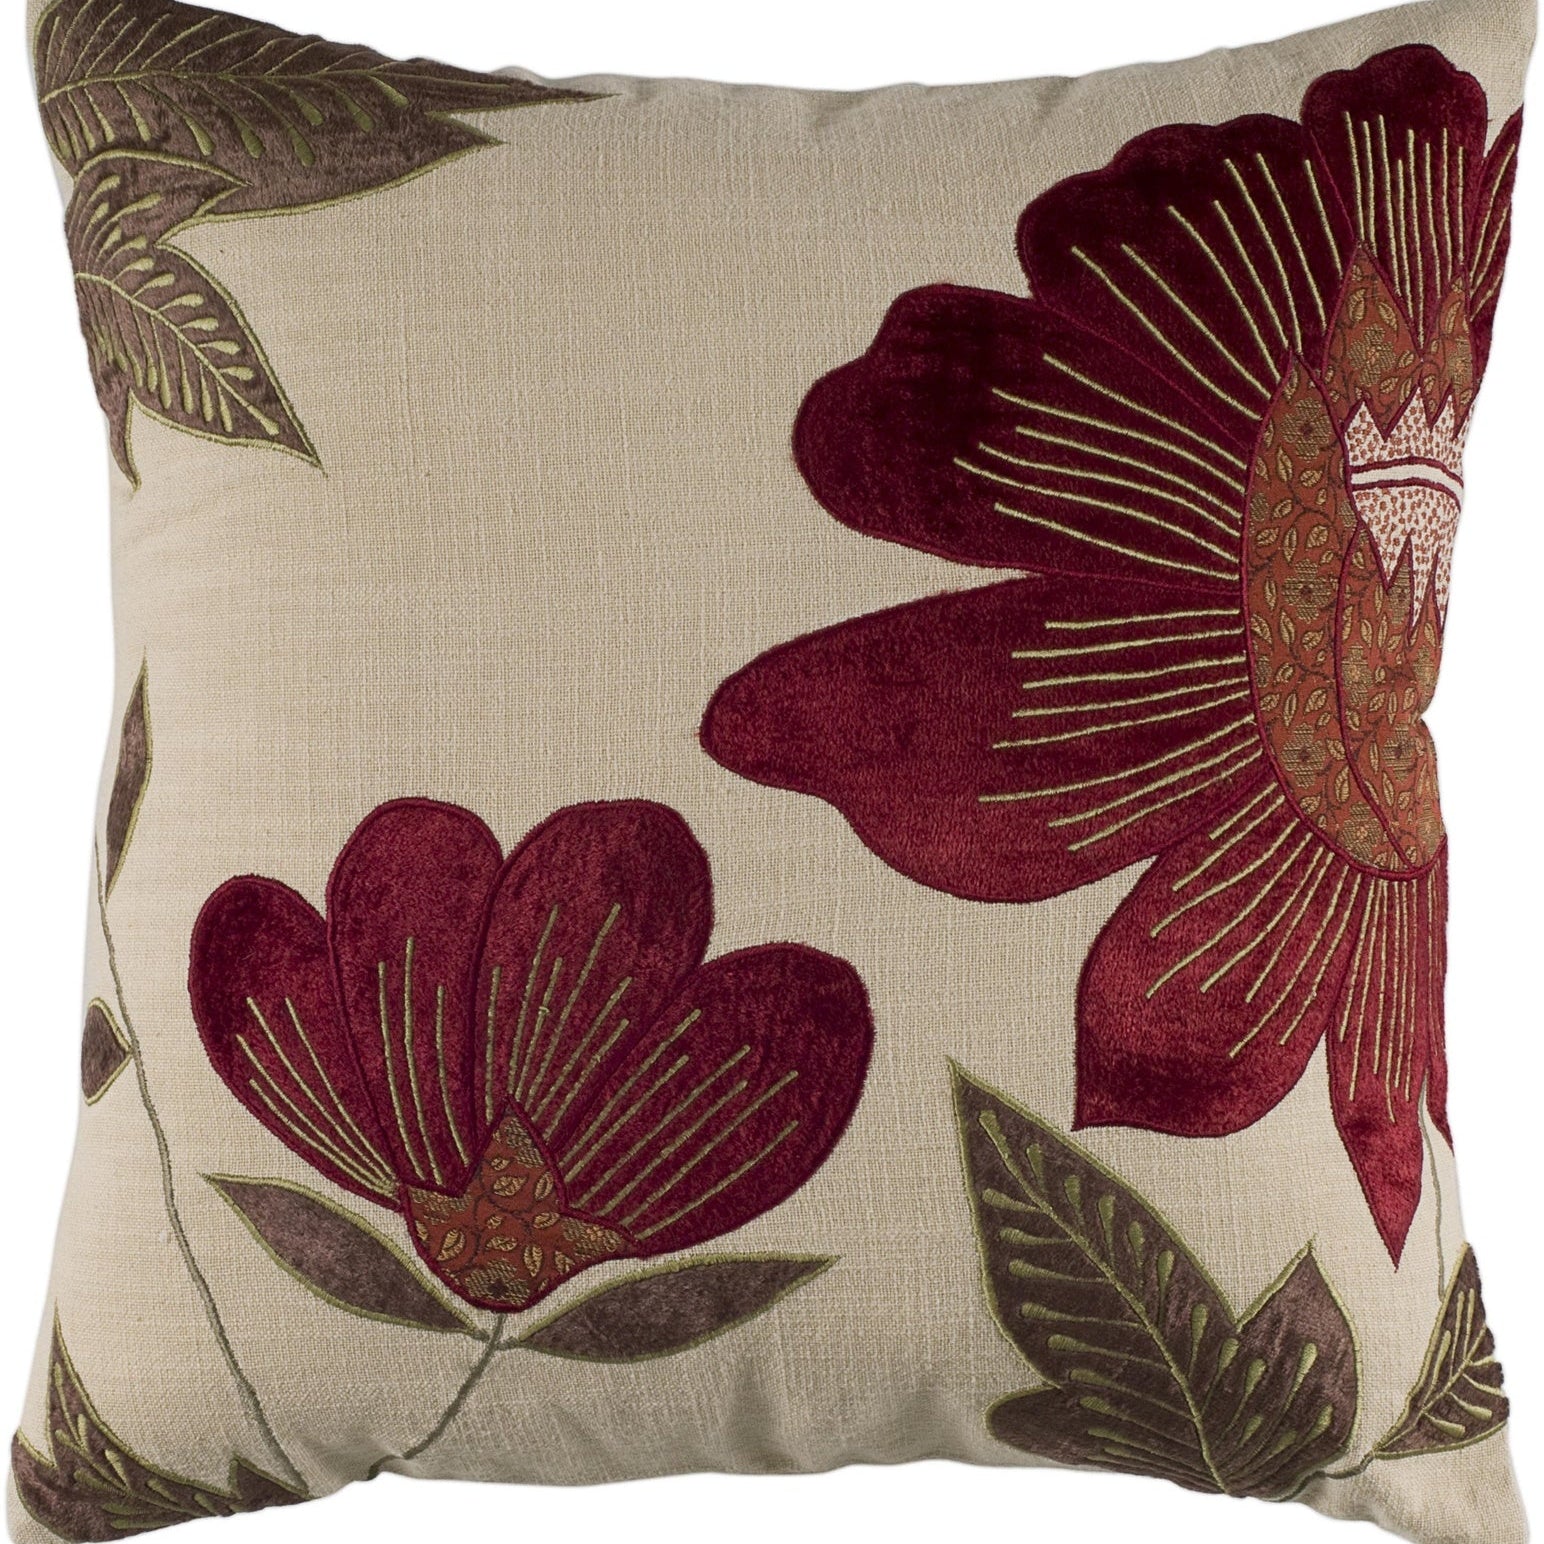 Knife-Edged-Velvet-Floral-Pillow-Cover-Decorative-Pillows